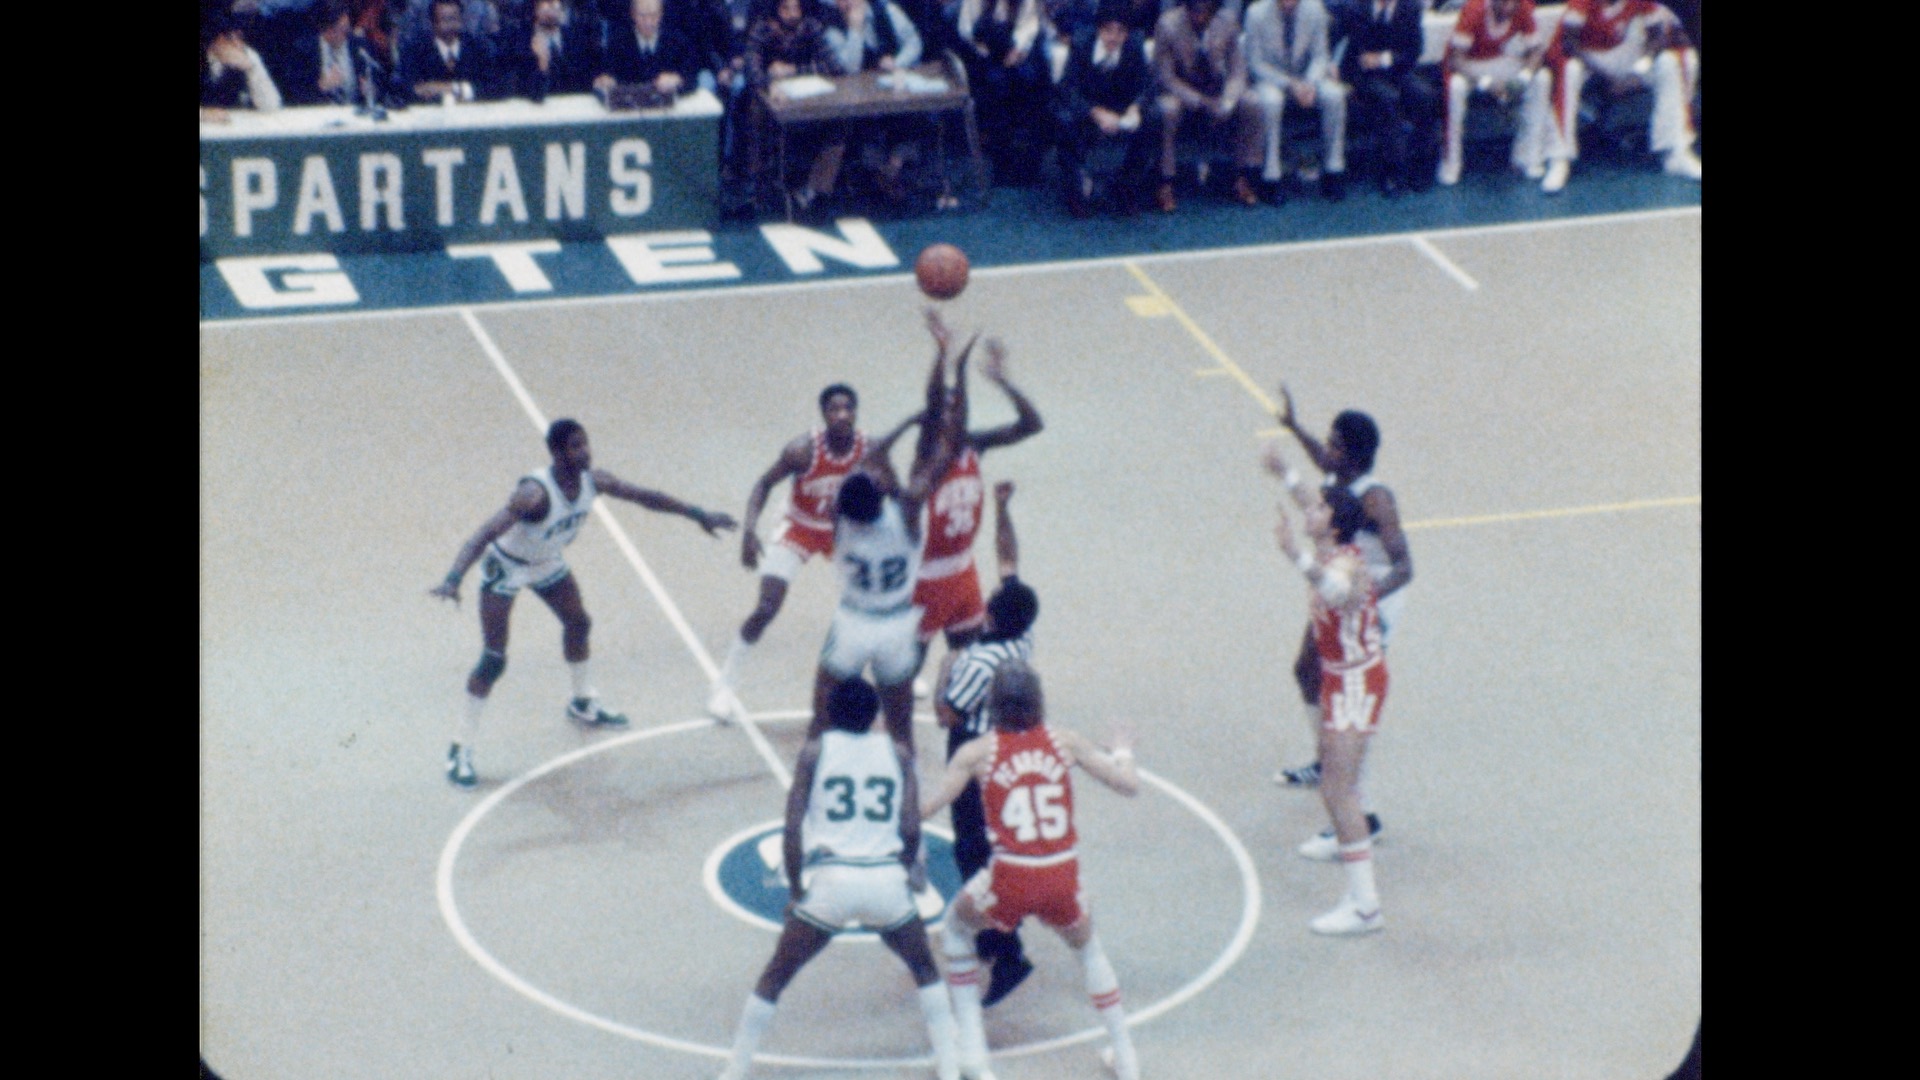 MSU Basketball vs. Wisconsin (home), 1978